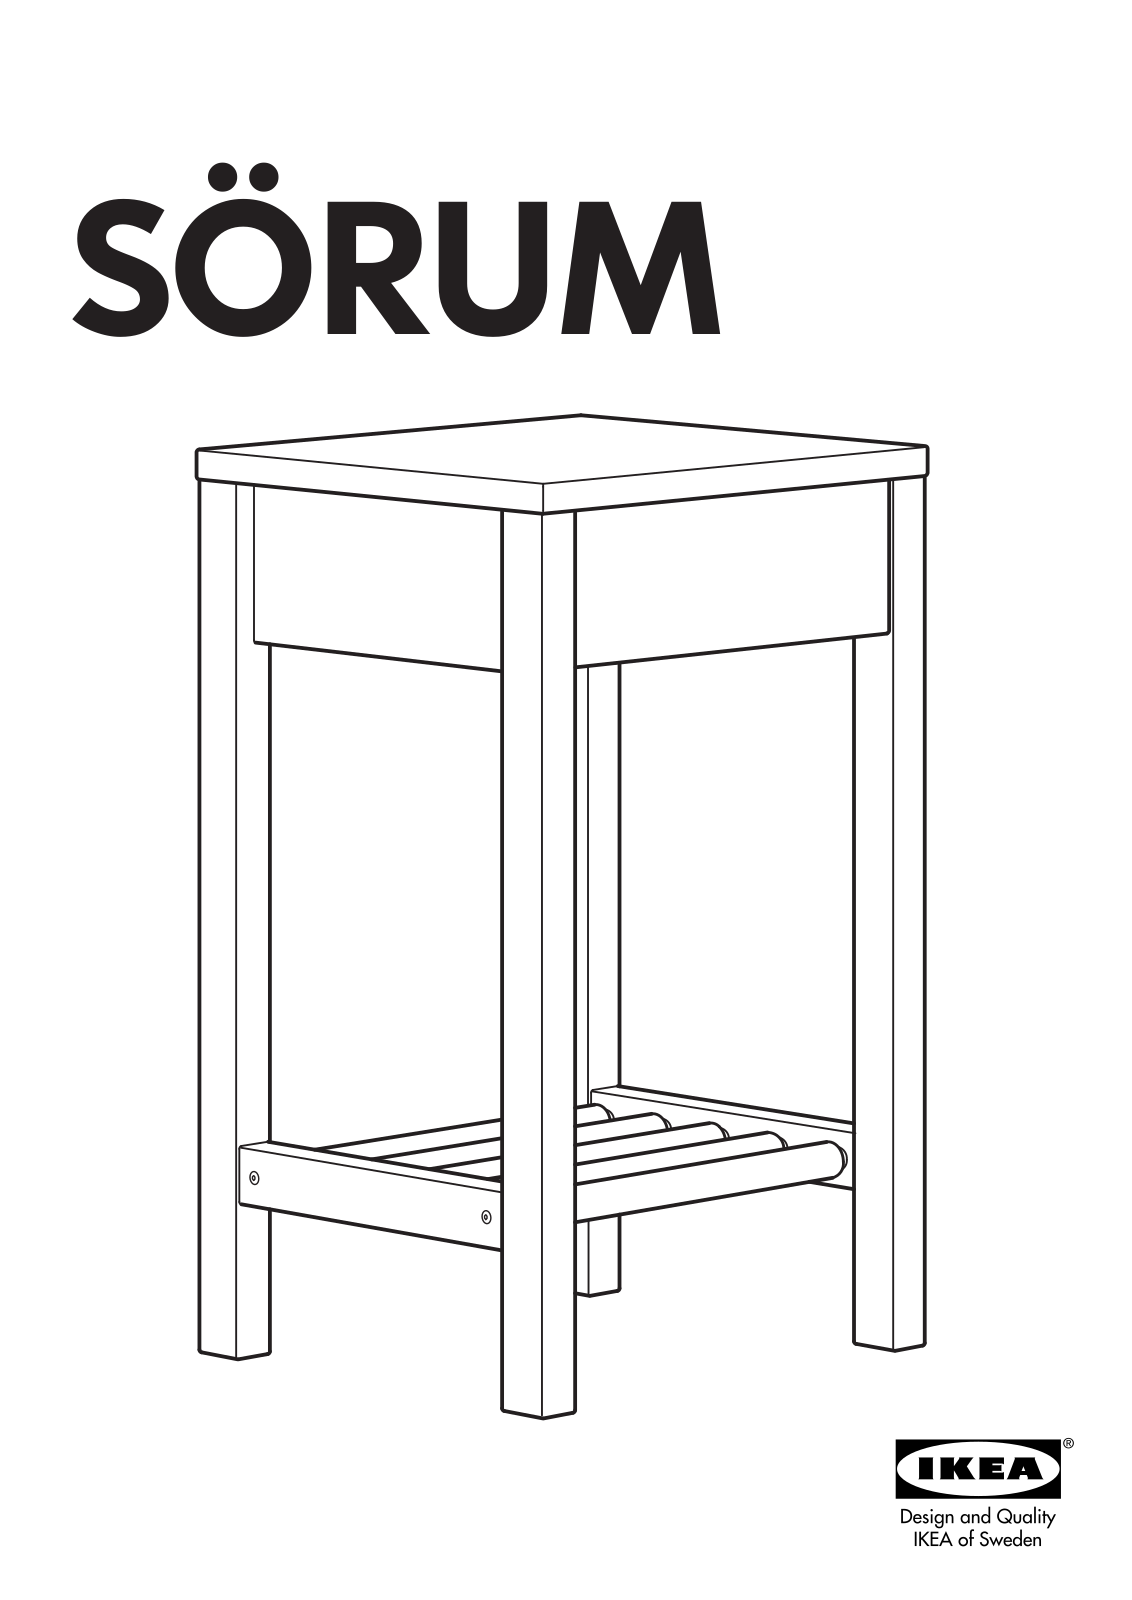 IKEA SORUM BEDSIDE TABLE 16X15 Assembly Instruction